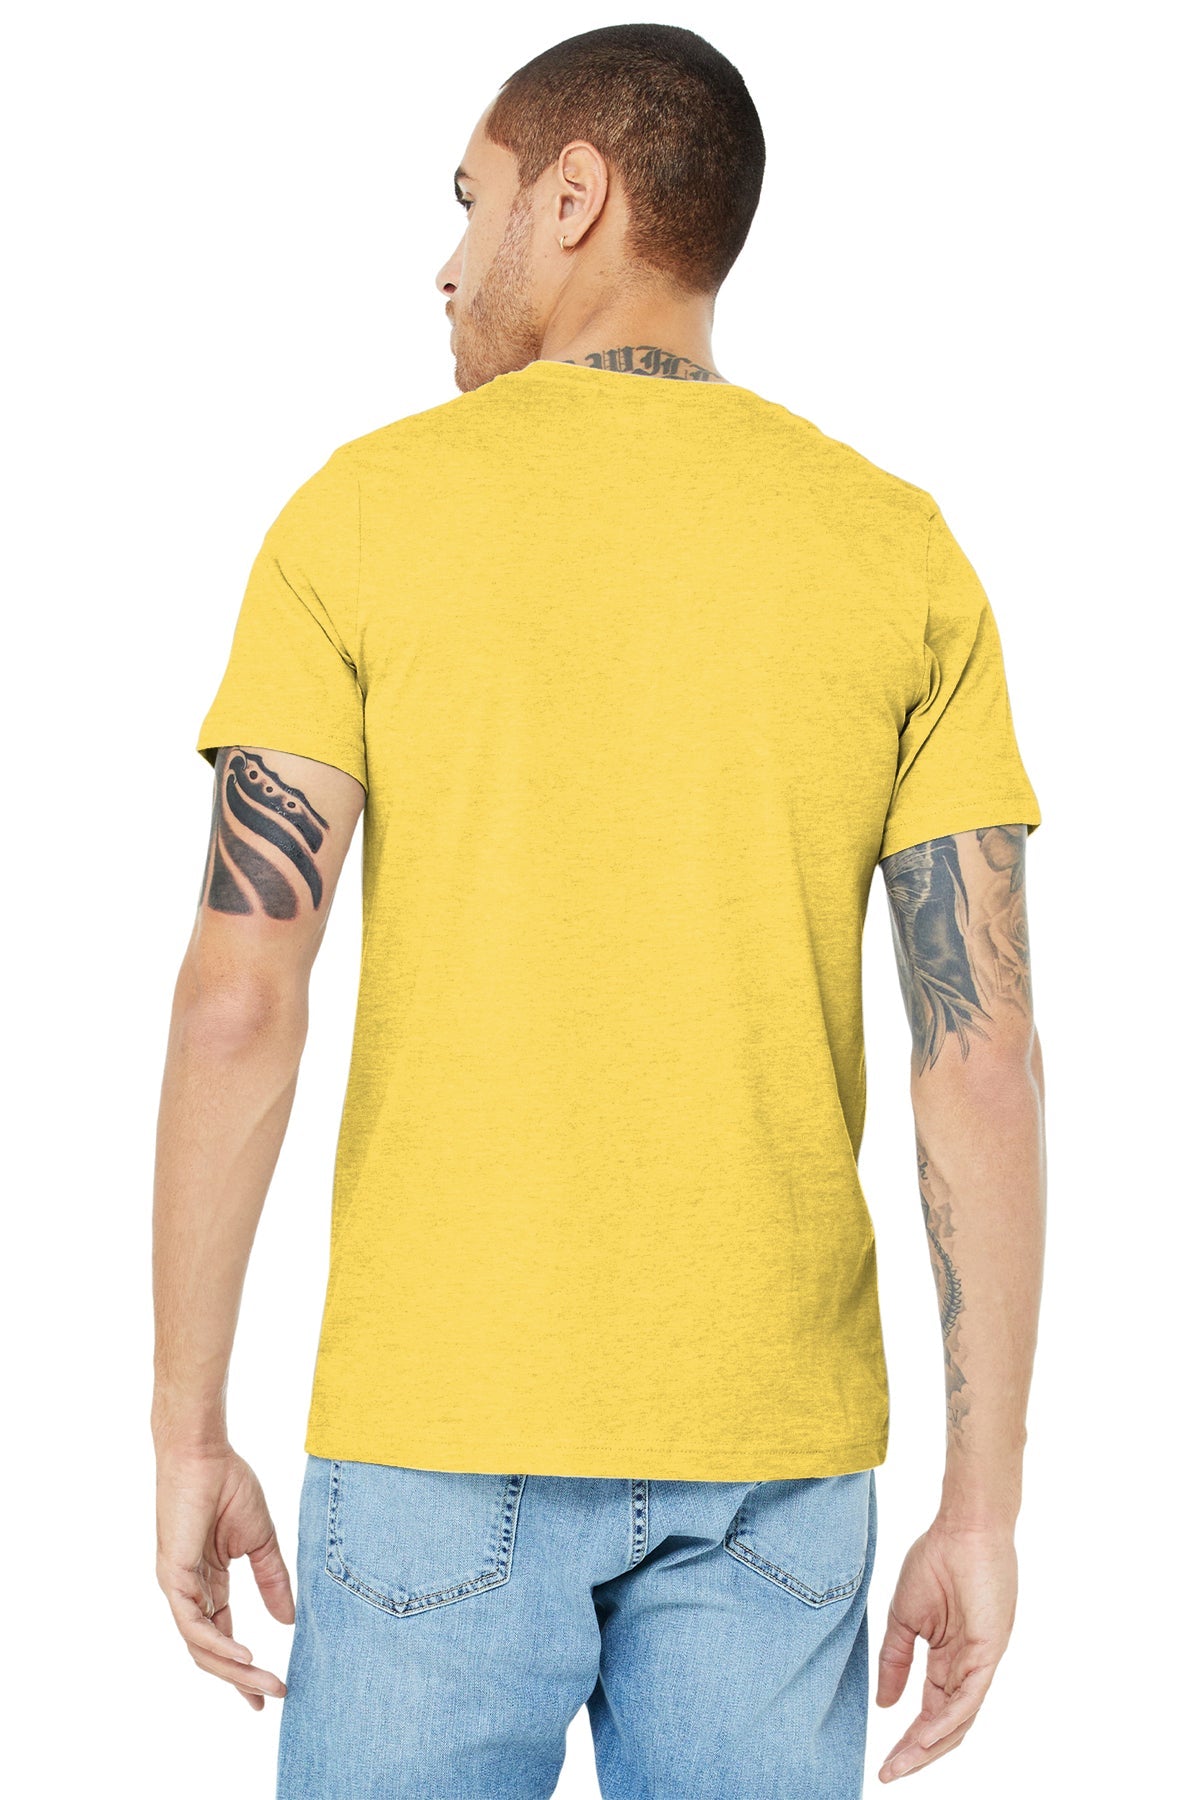 bella + canvas unisex jersey short sleeve t-shirt 3001c hthr yellow gold